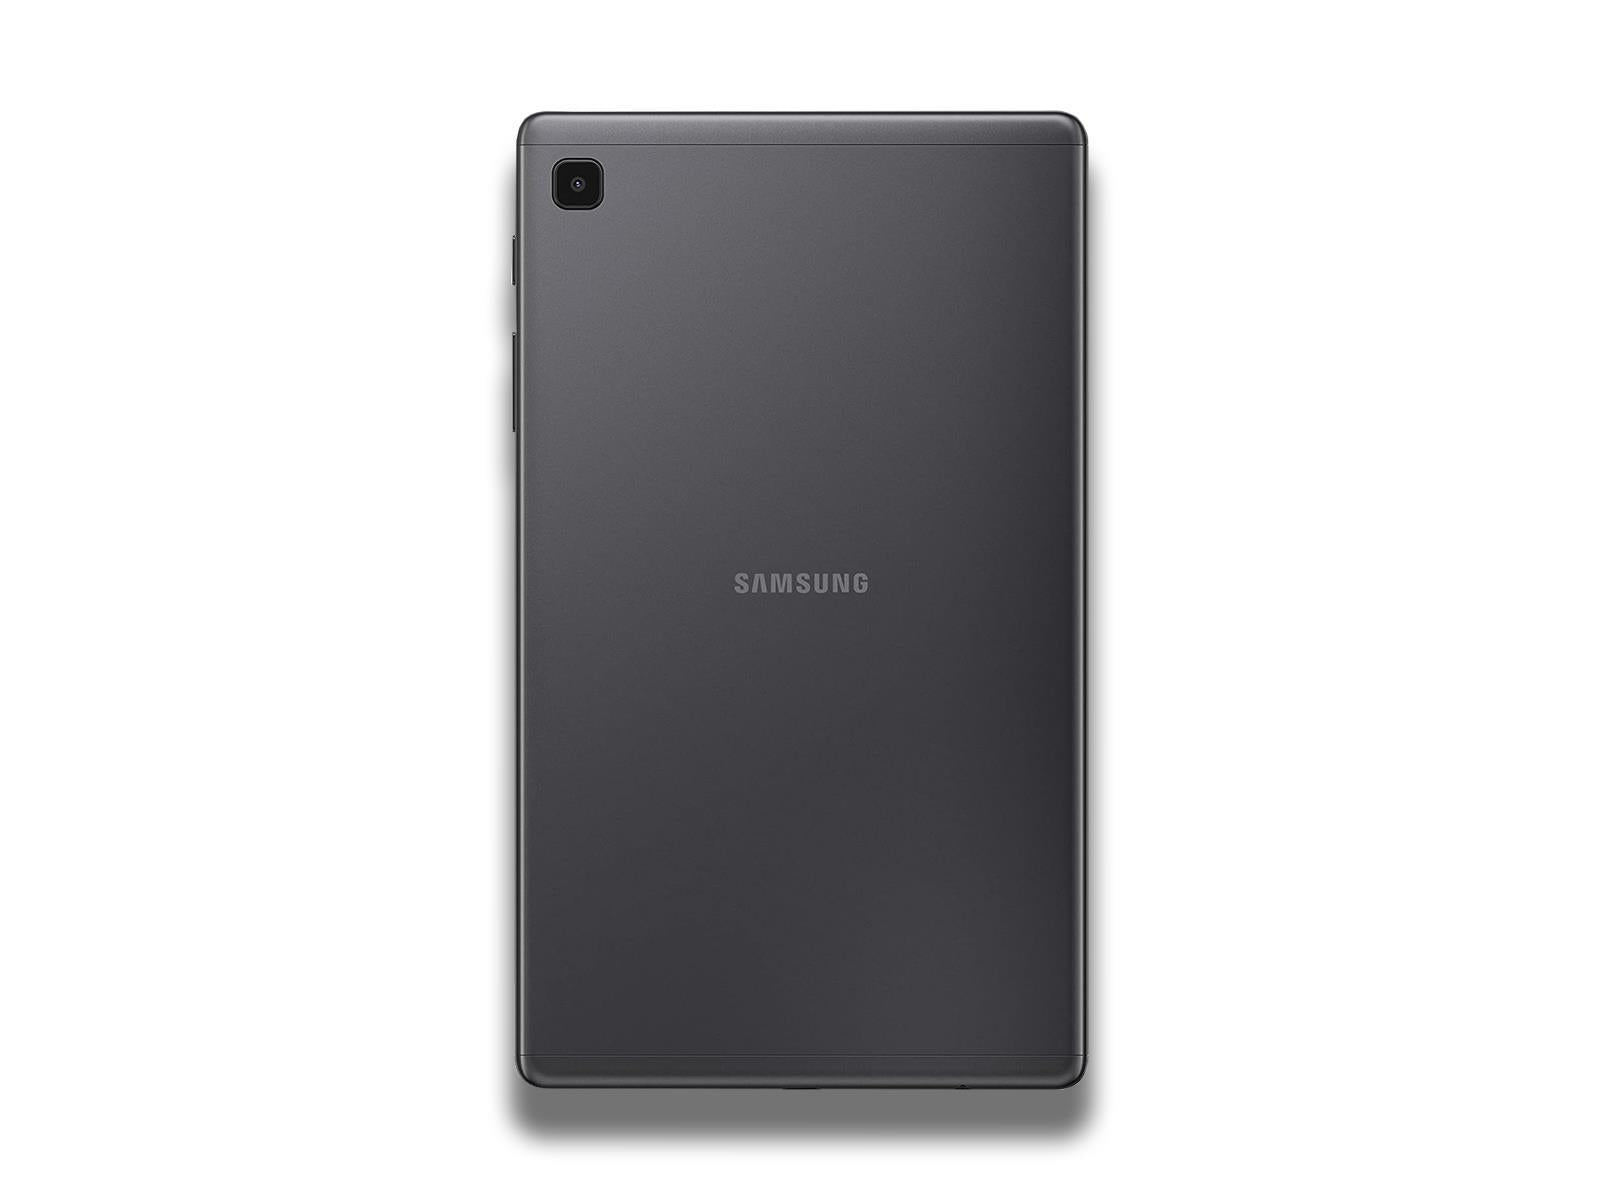 Samsung Galaxy A7 Lite Grey rear view